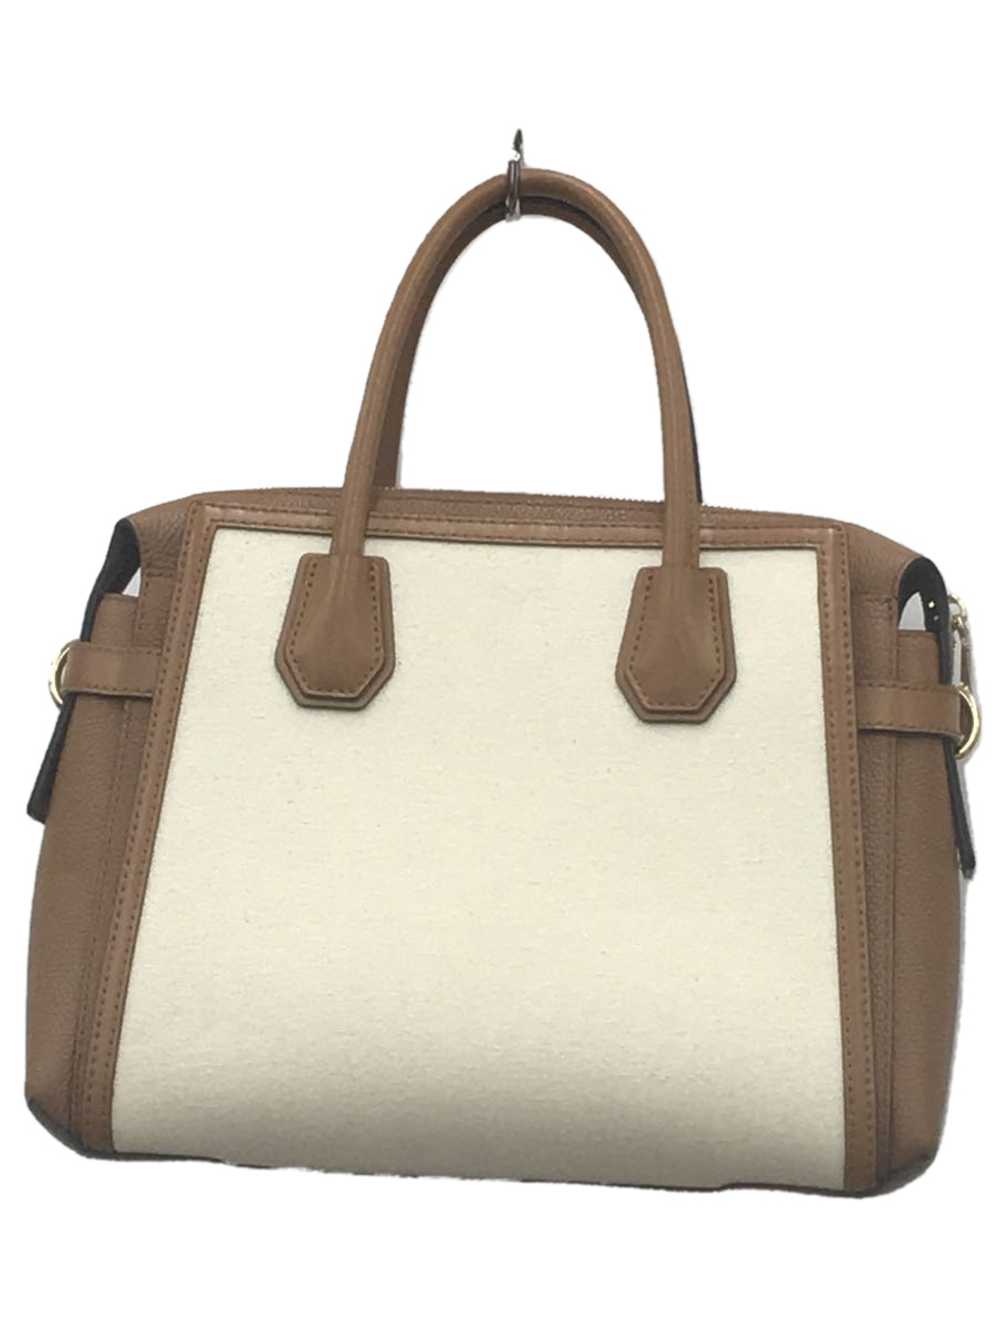 Michael Kors Handbag/Canvas/Brw/Plain Bag - image 3